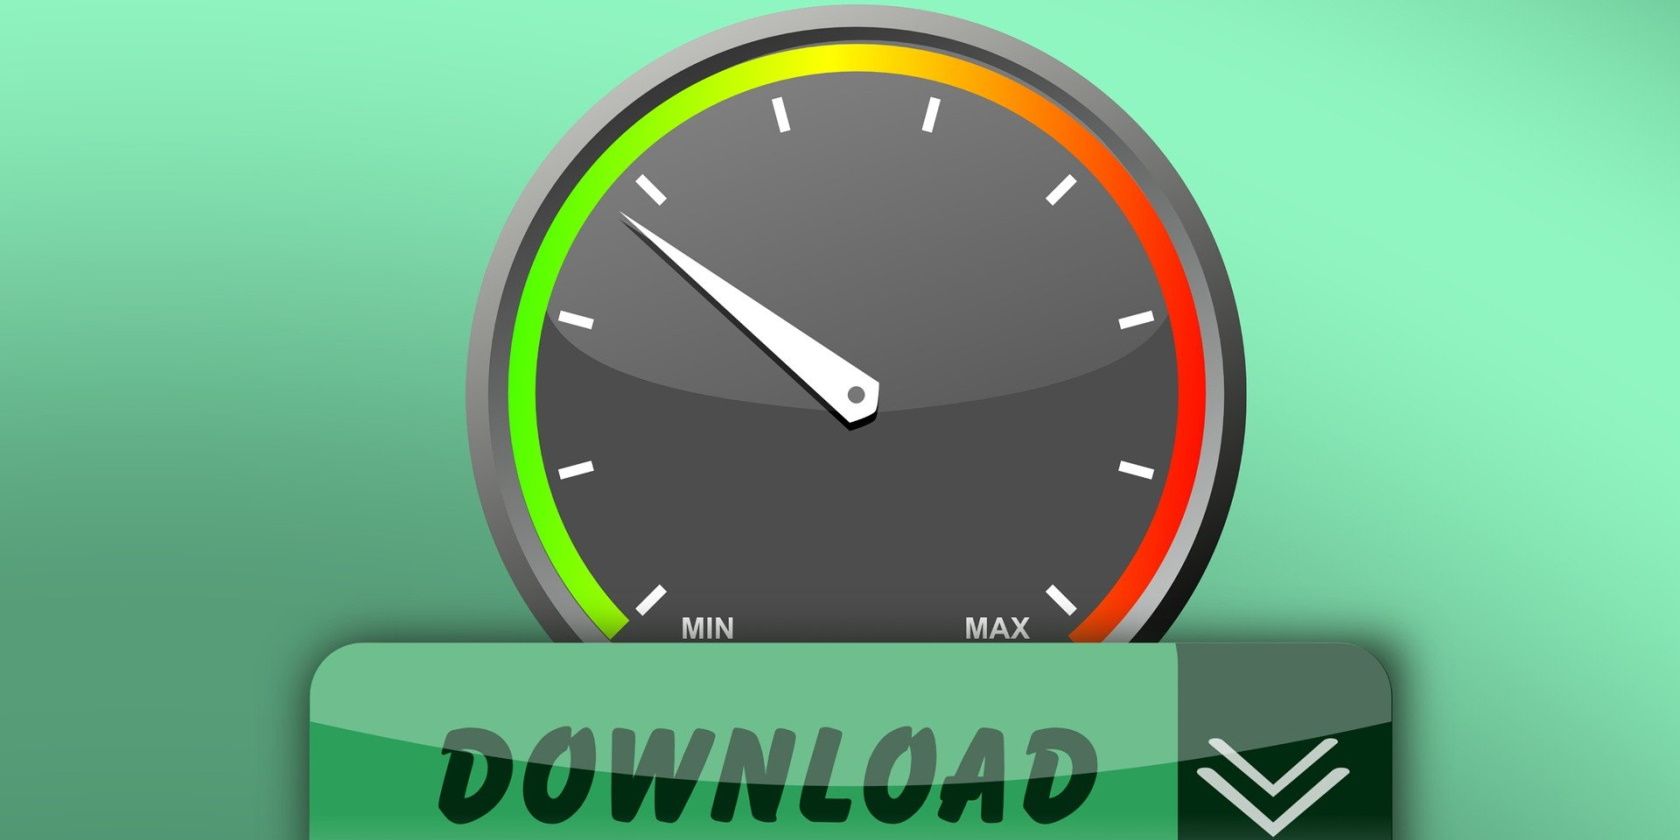 Speed test to check internet speed